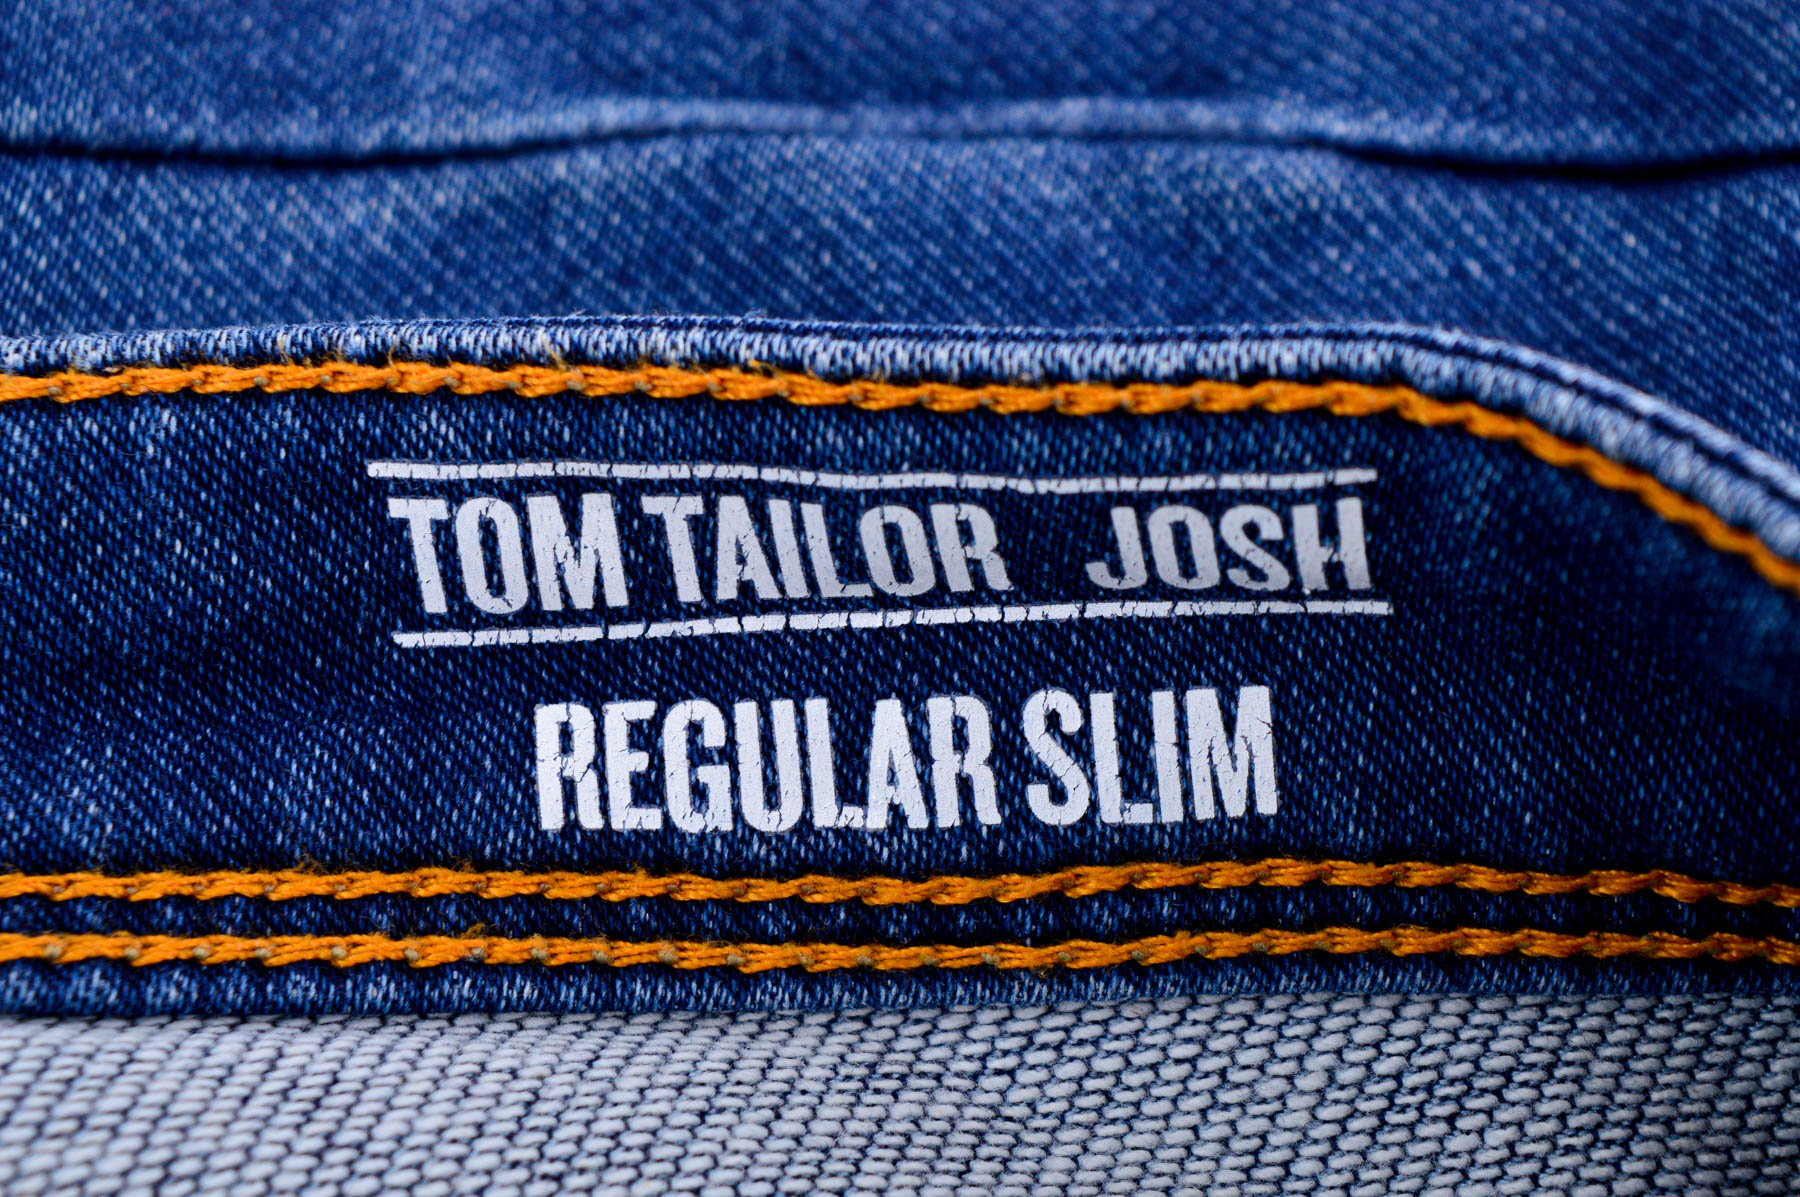 Men's shorts - TOM TAILOR JOSH - 2